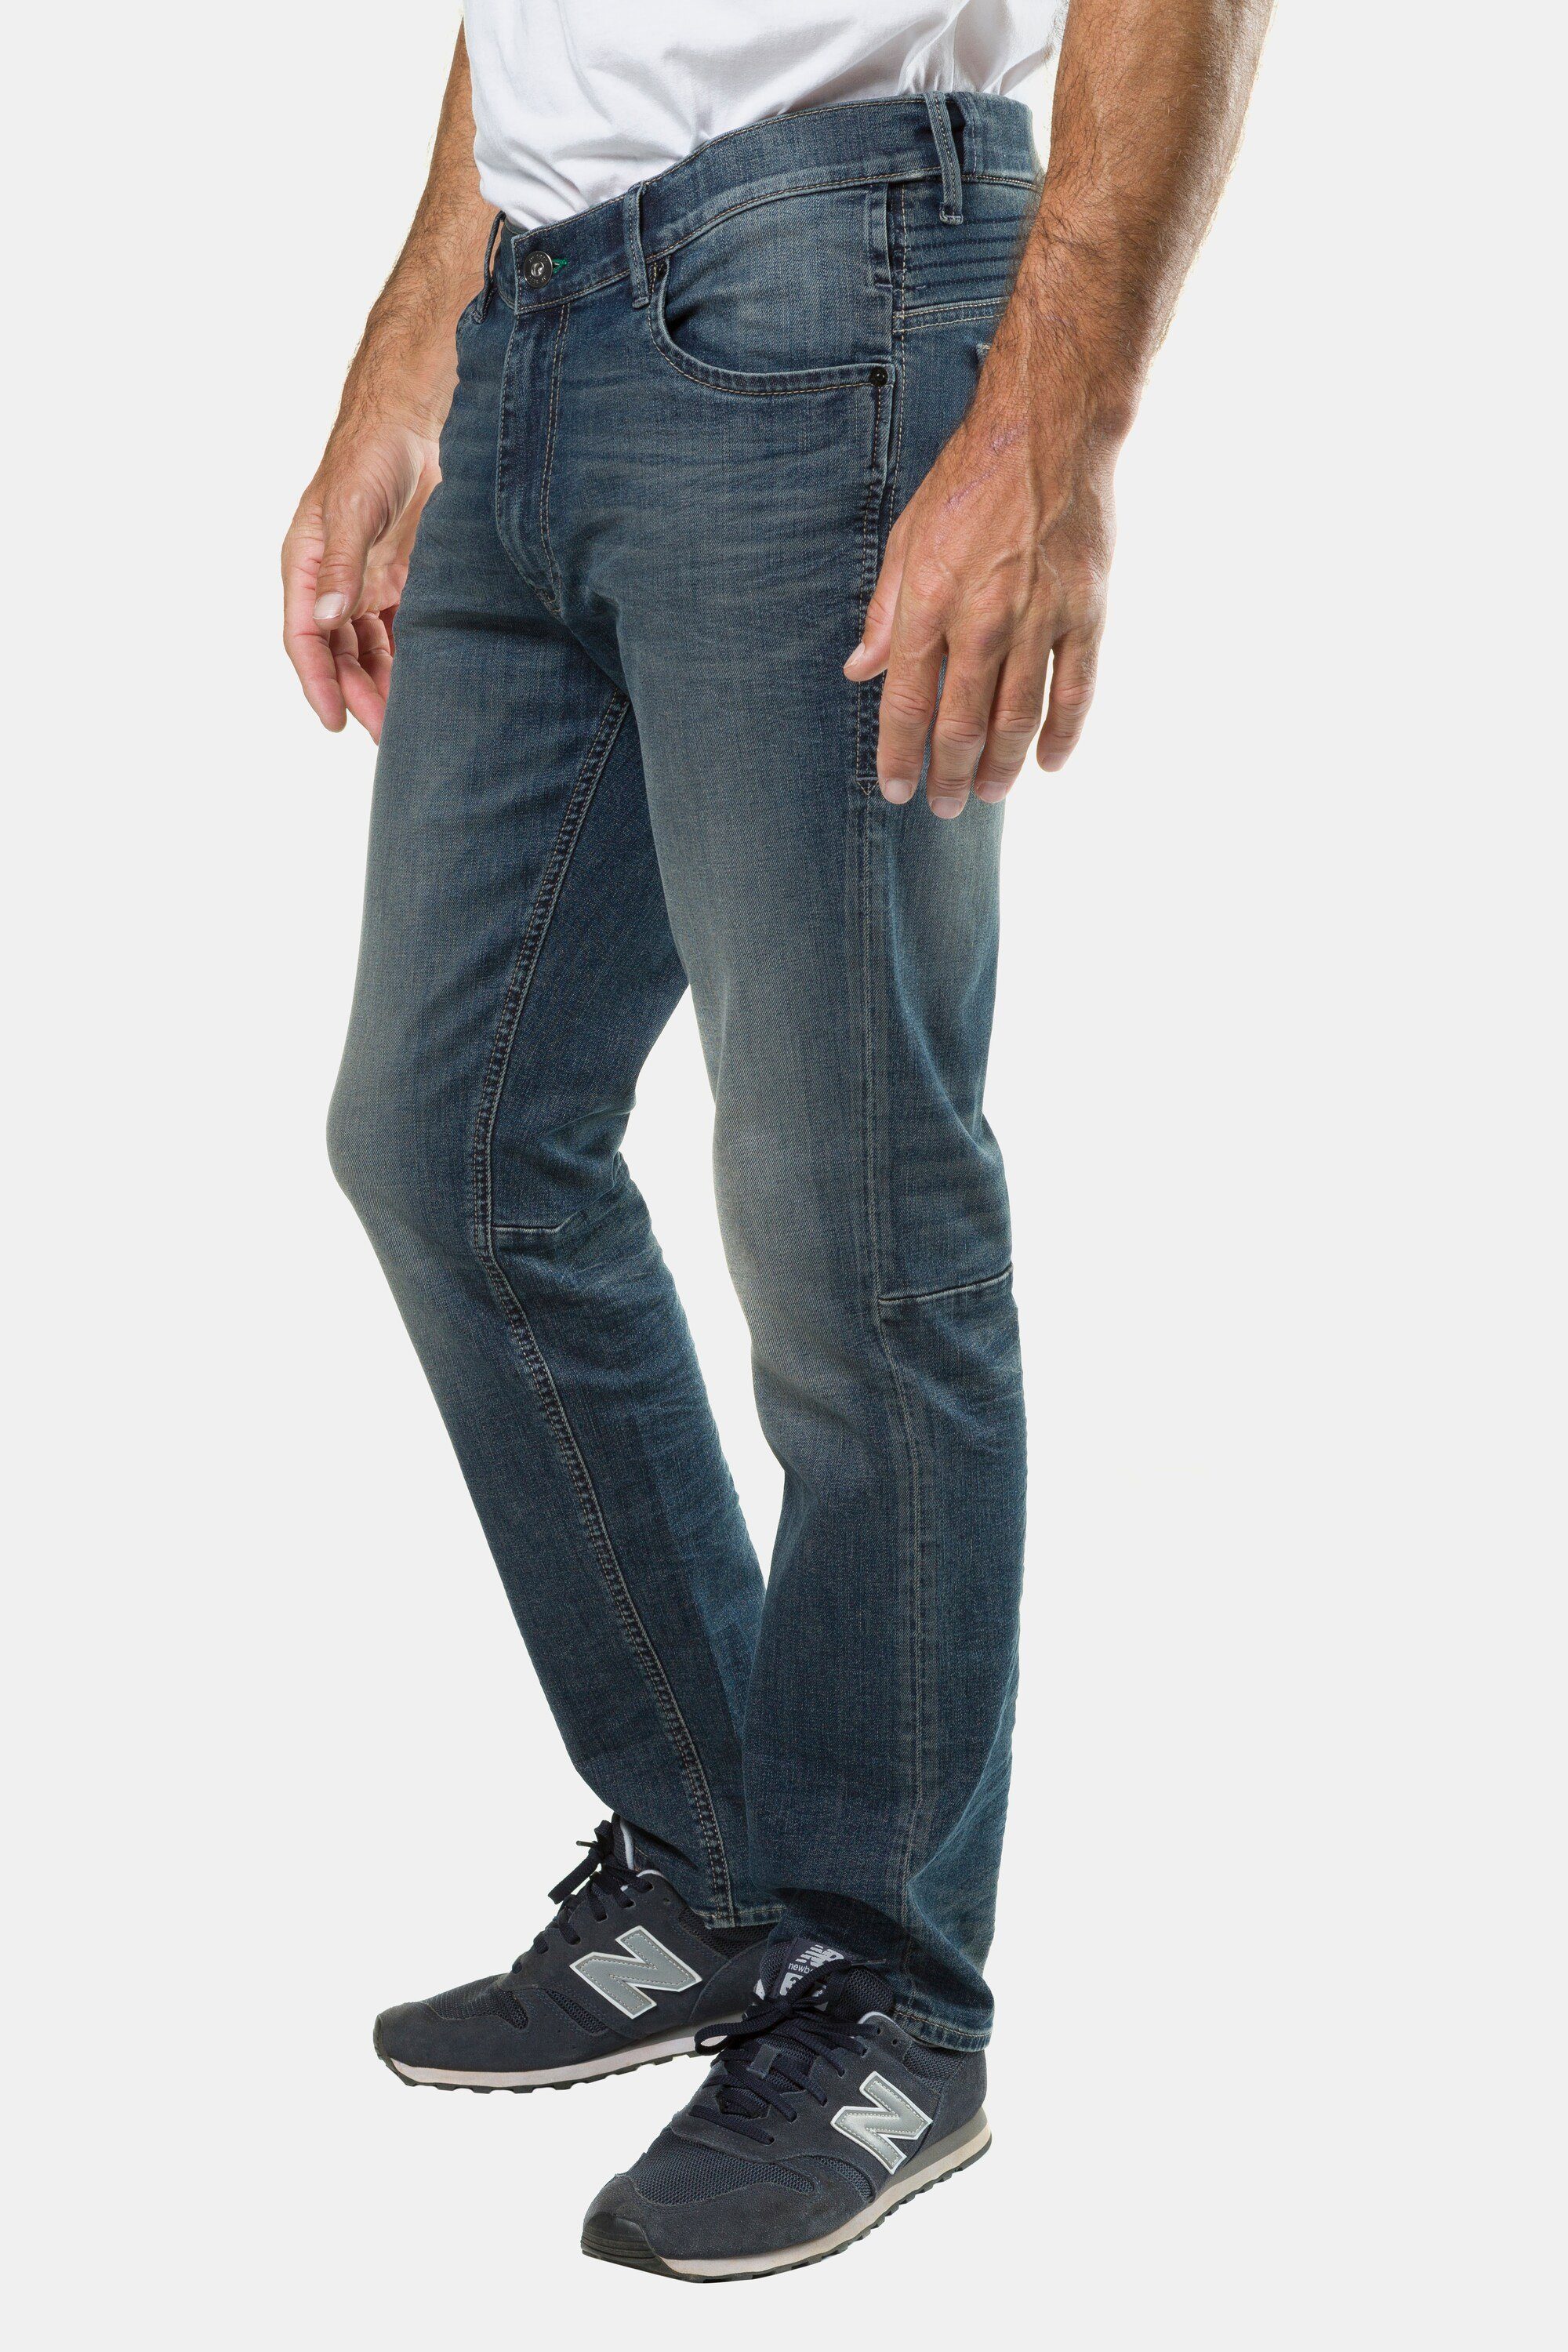 JP1880 Cargohose Traveller-Bund Denim Jeans Fit blue stone Straight